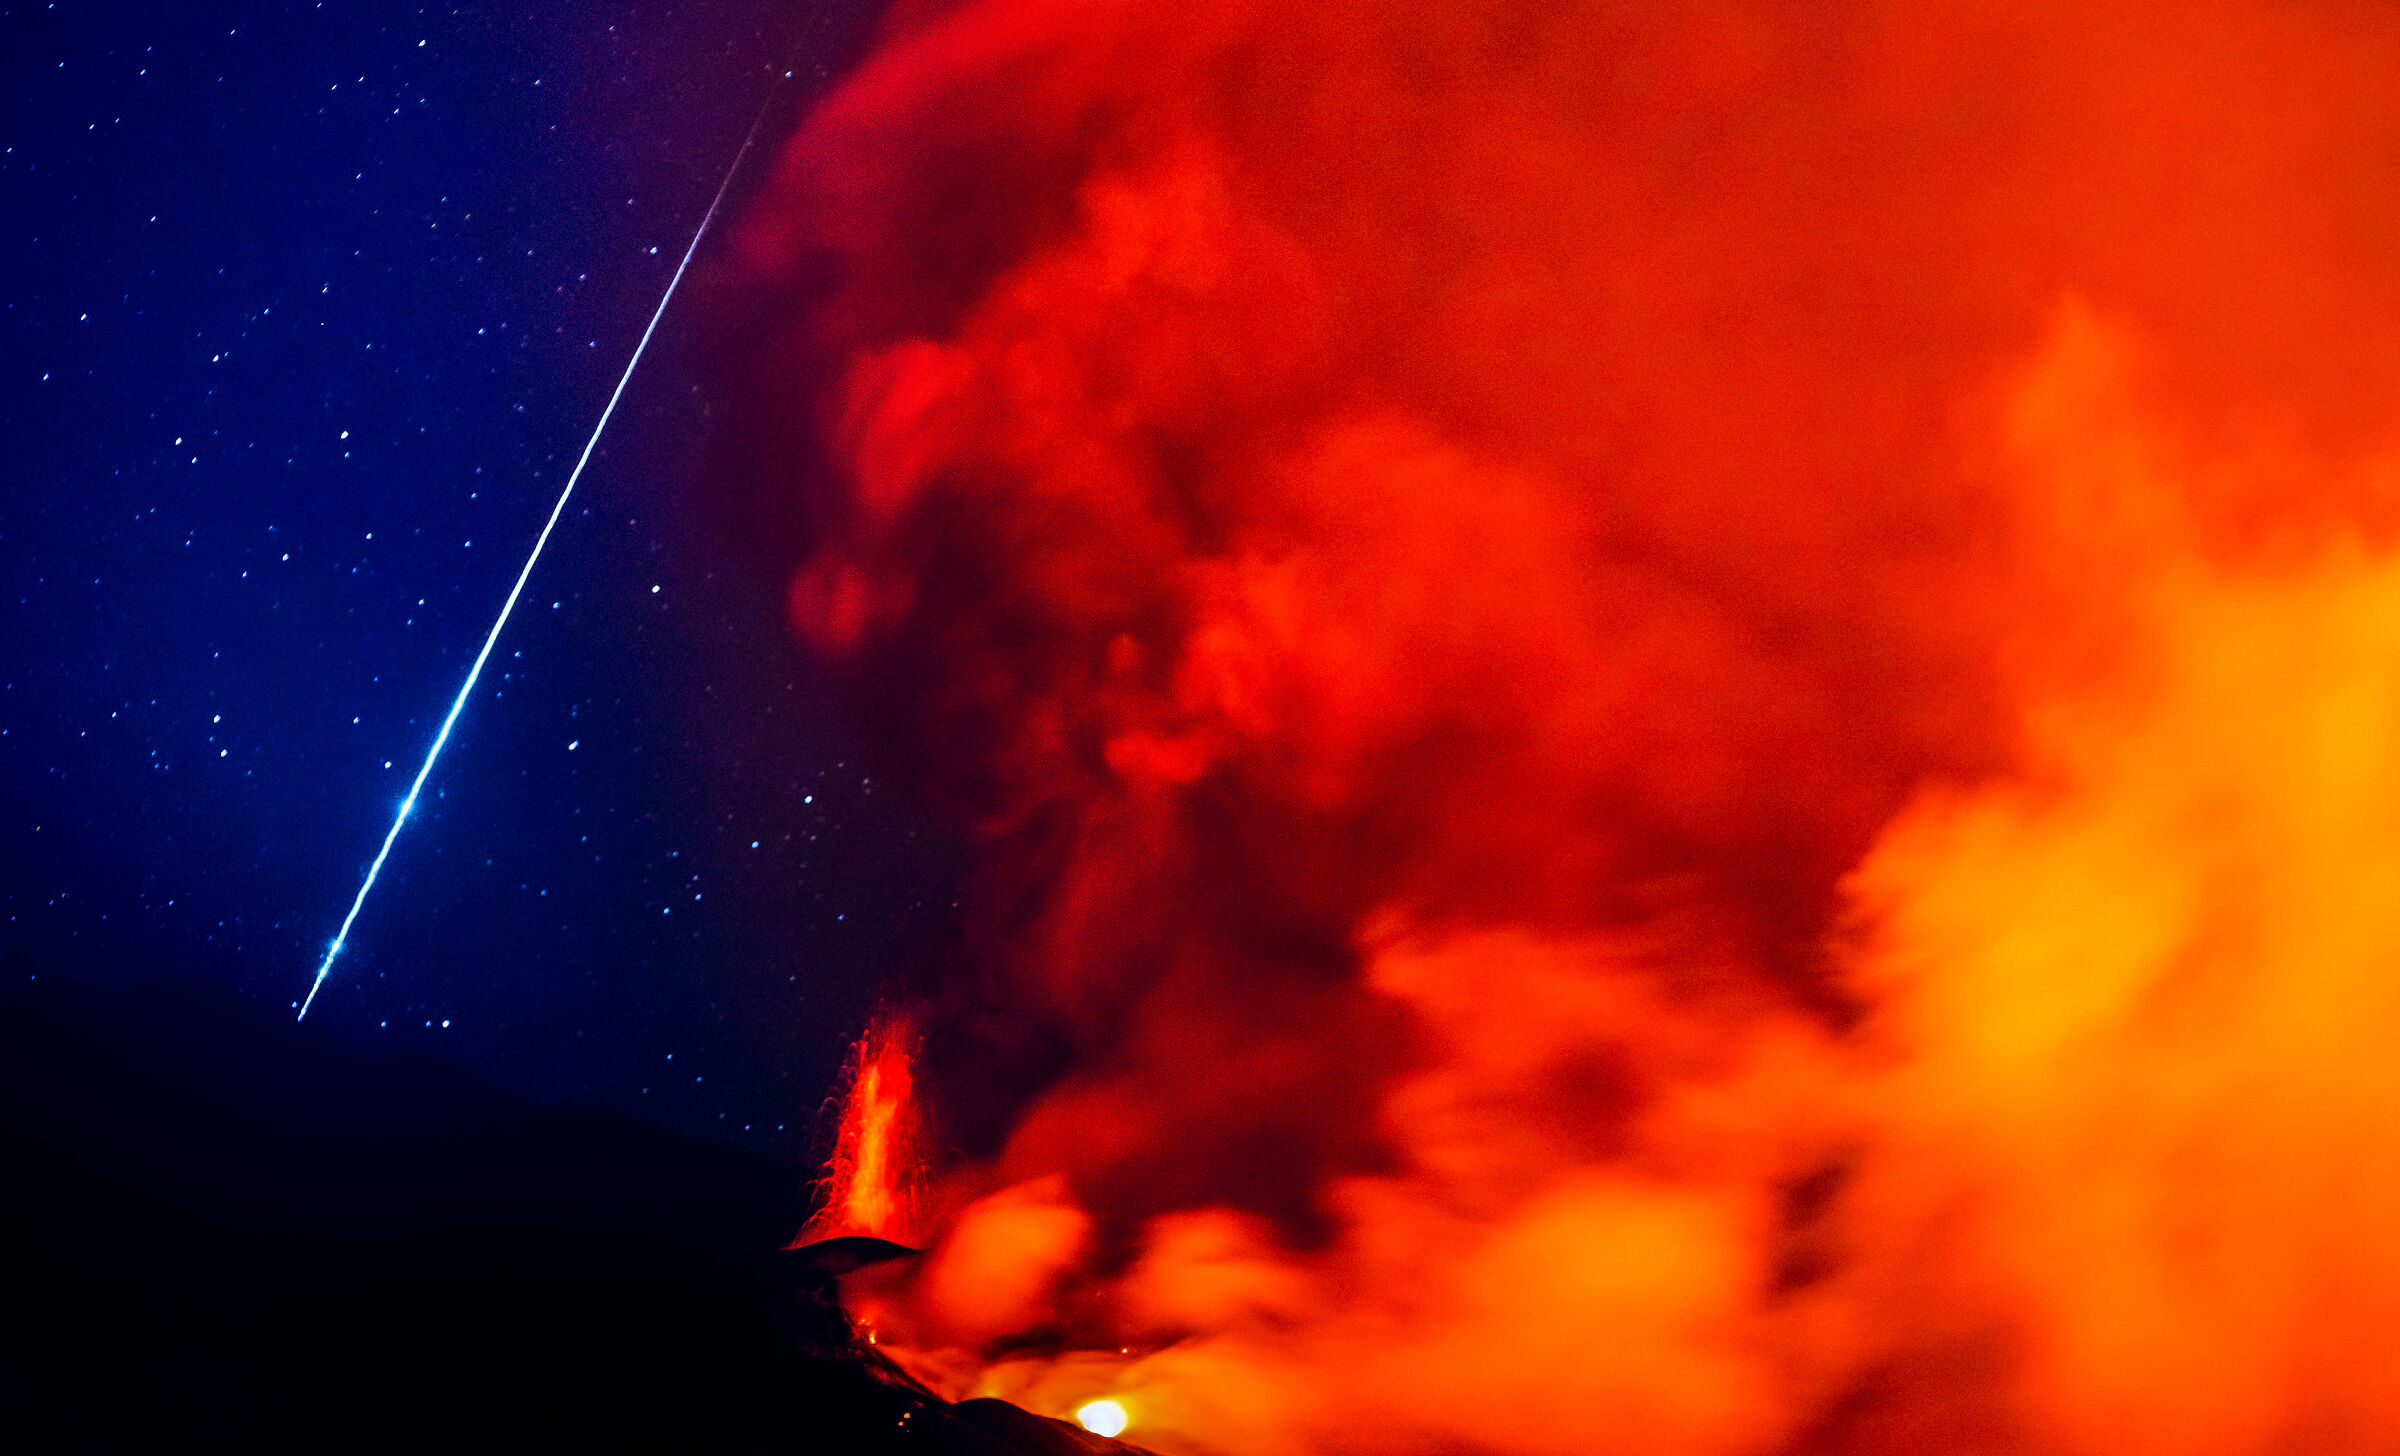 taurid fireball over active volcano in La Palma...